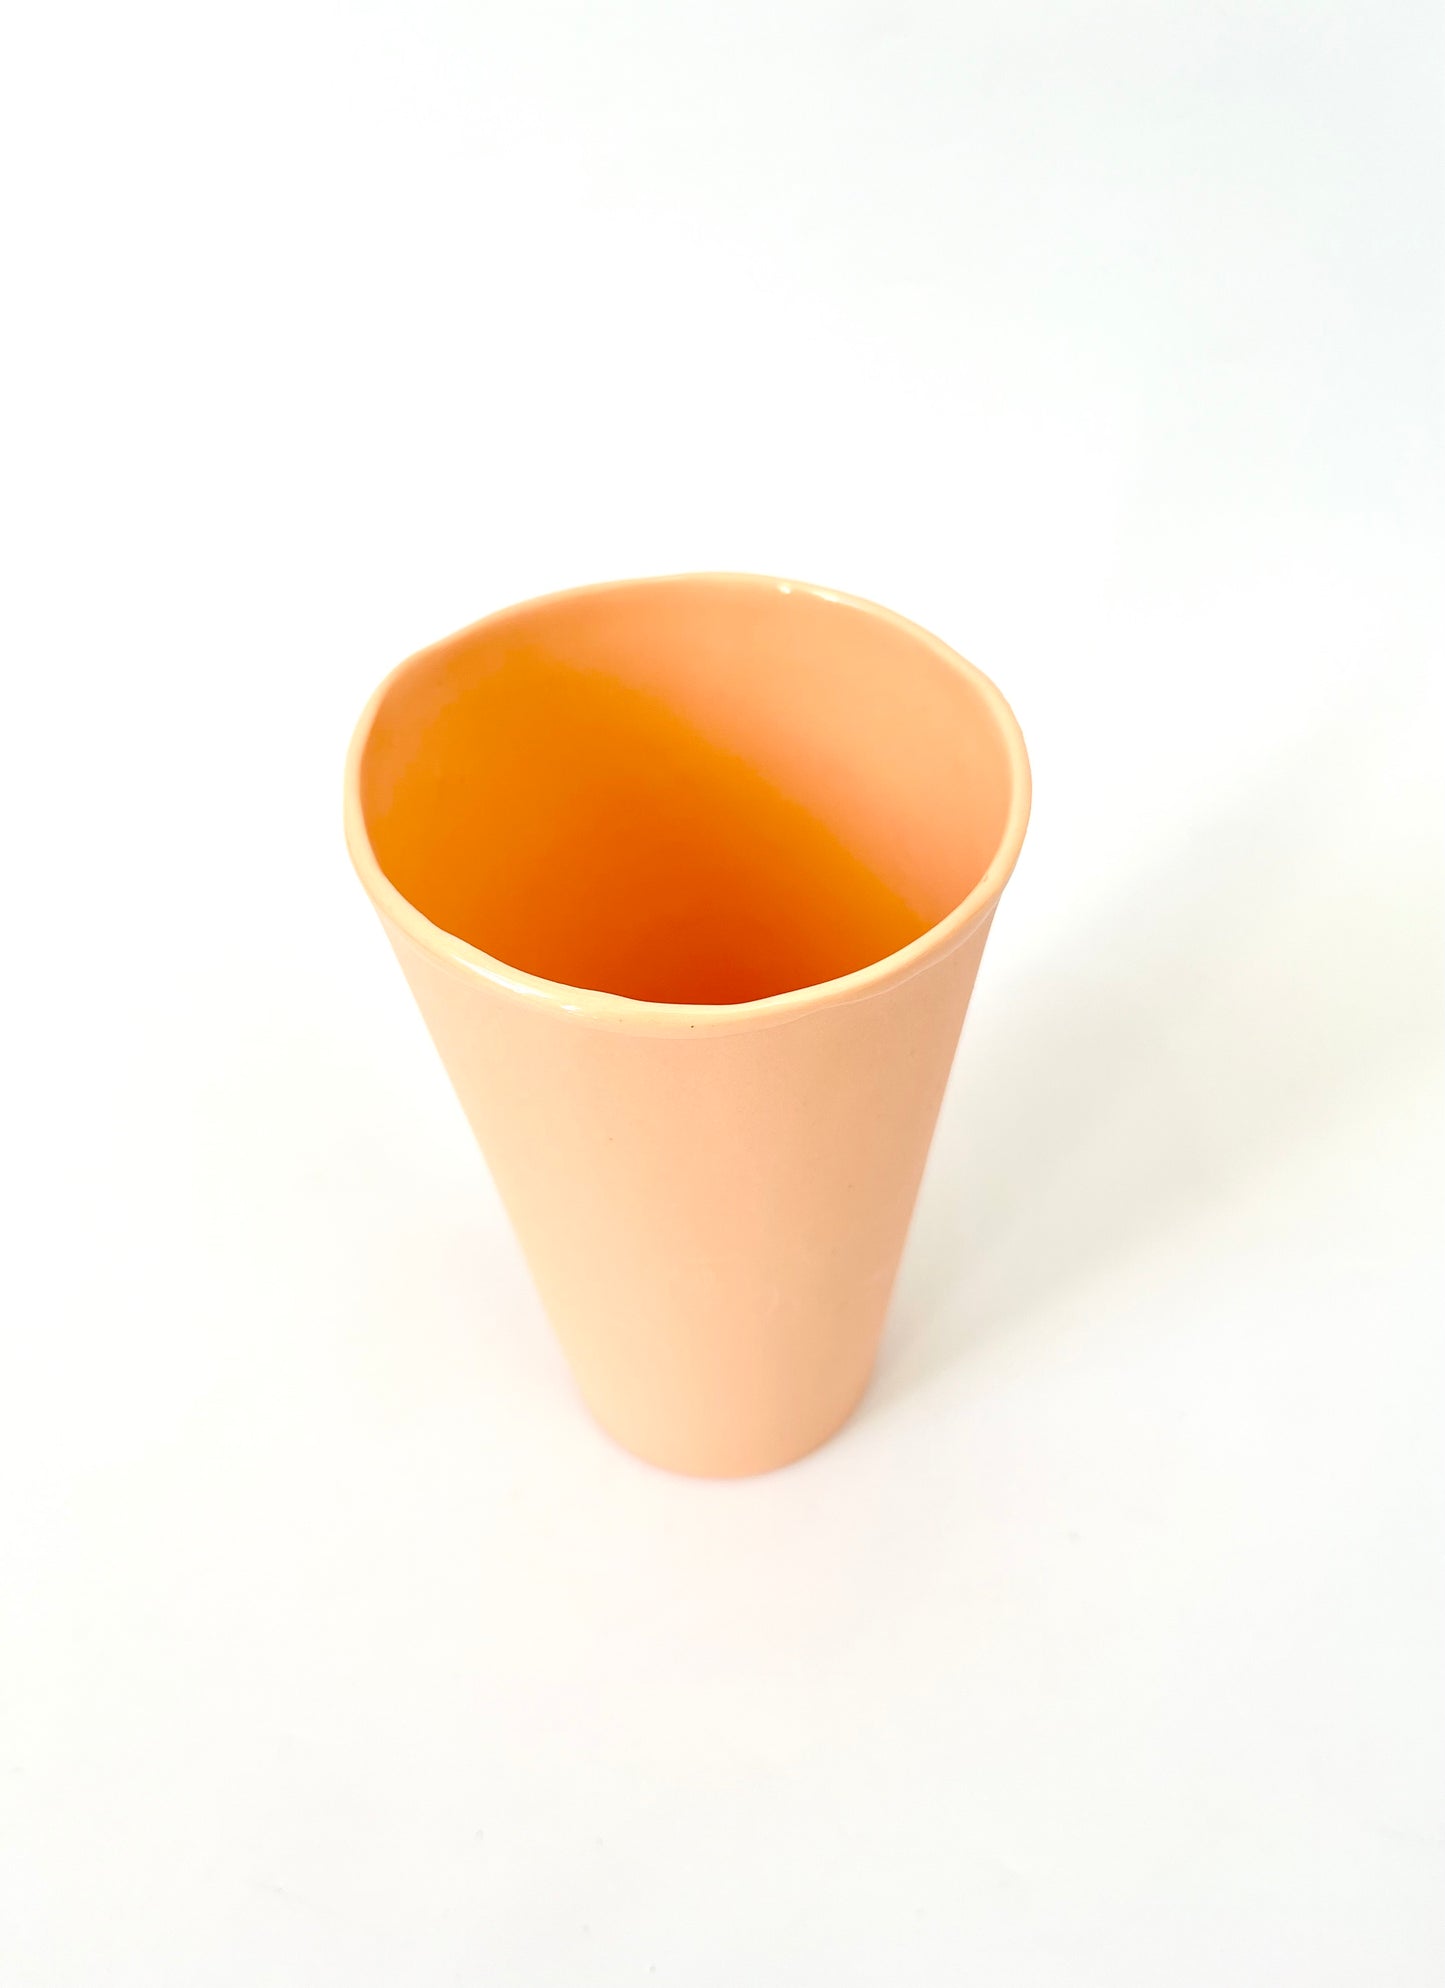 Cantaloupe Vessel - One of a Kind Ceramic - Medium 8 x12cm